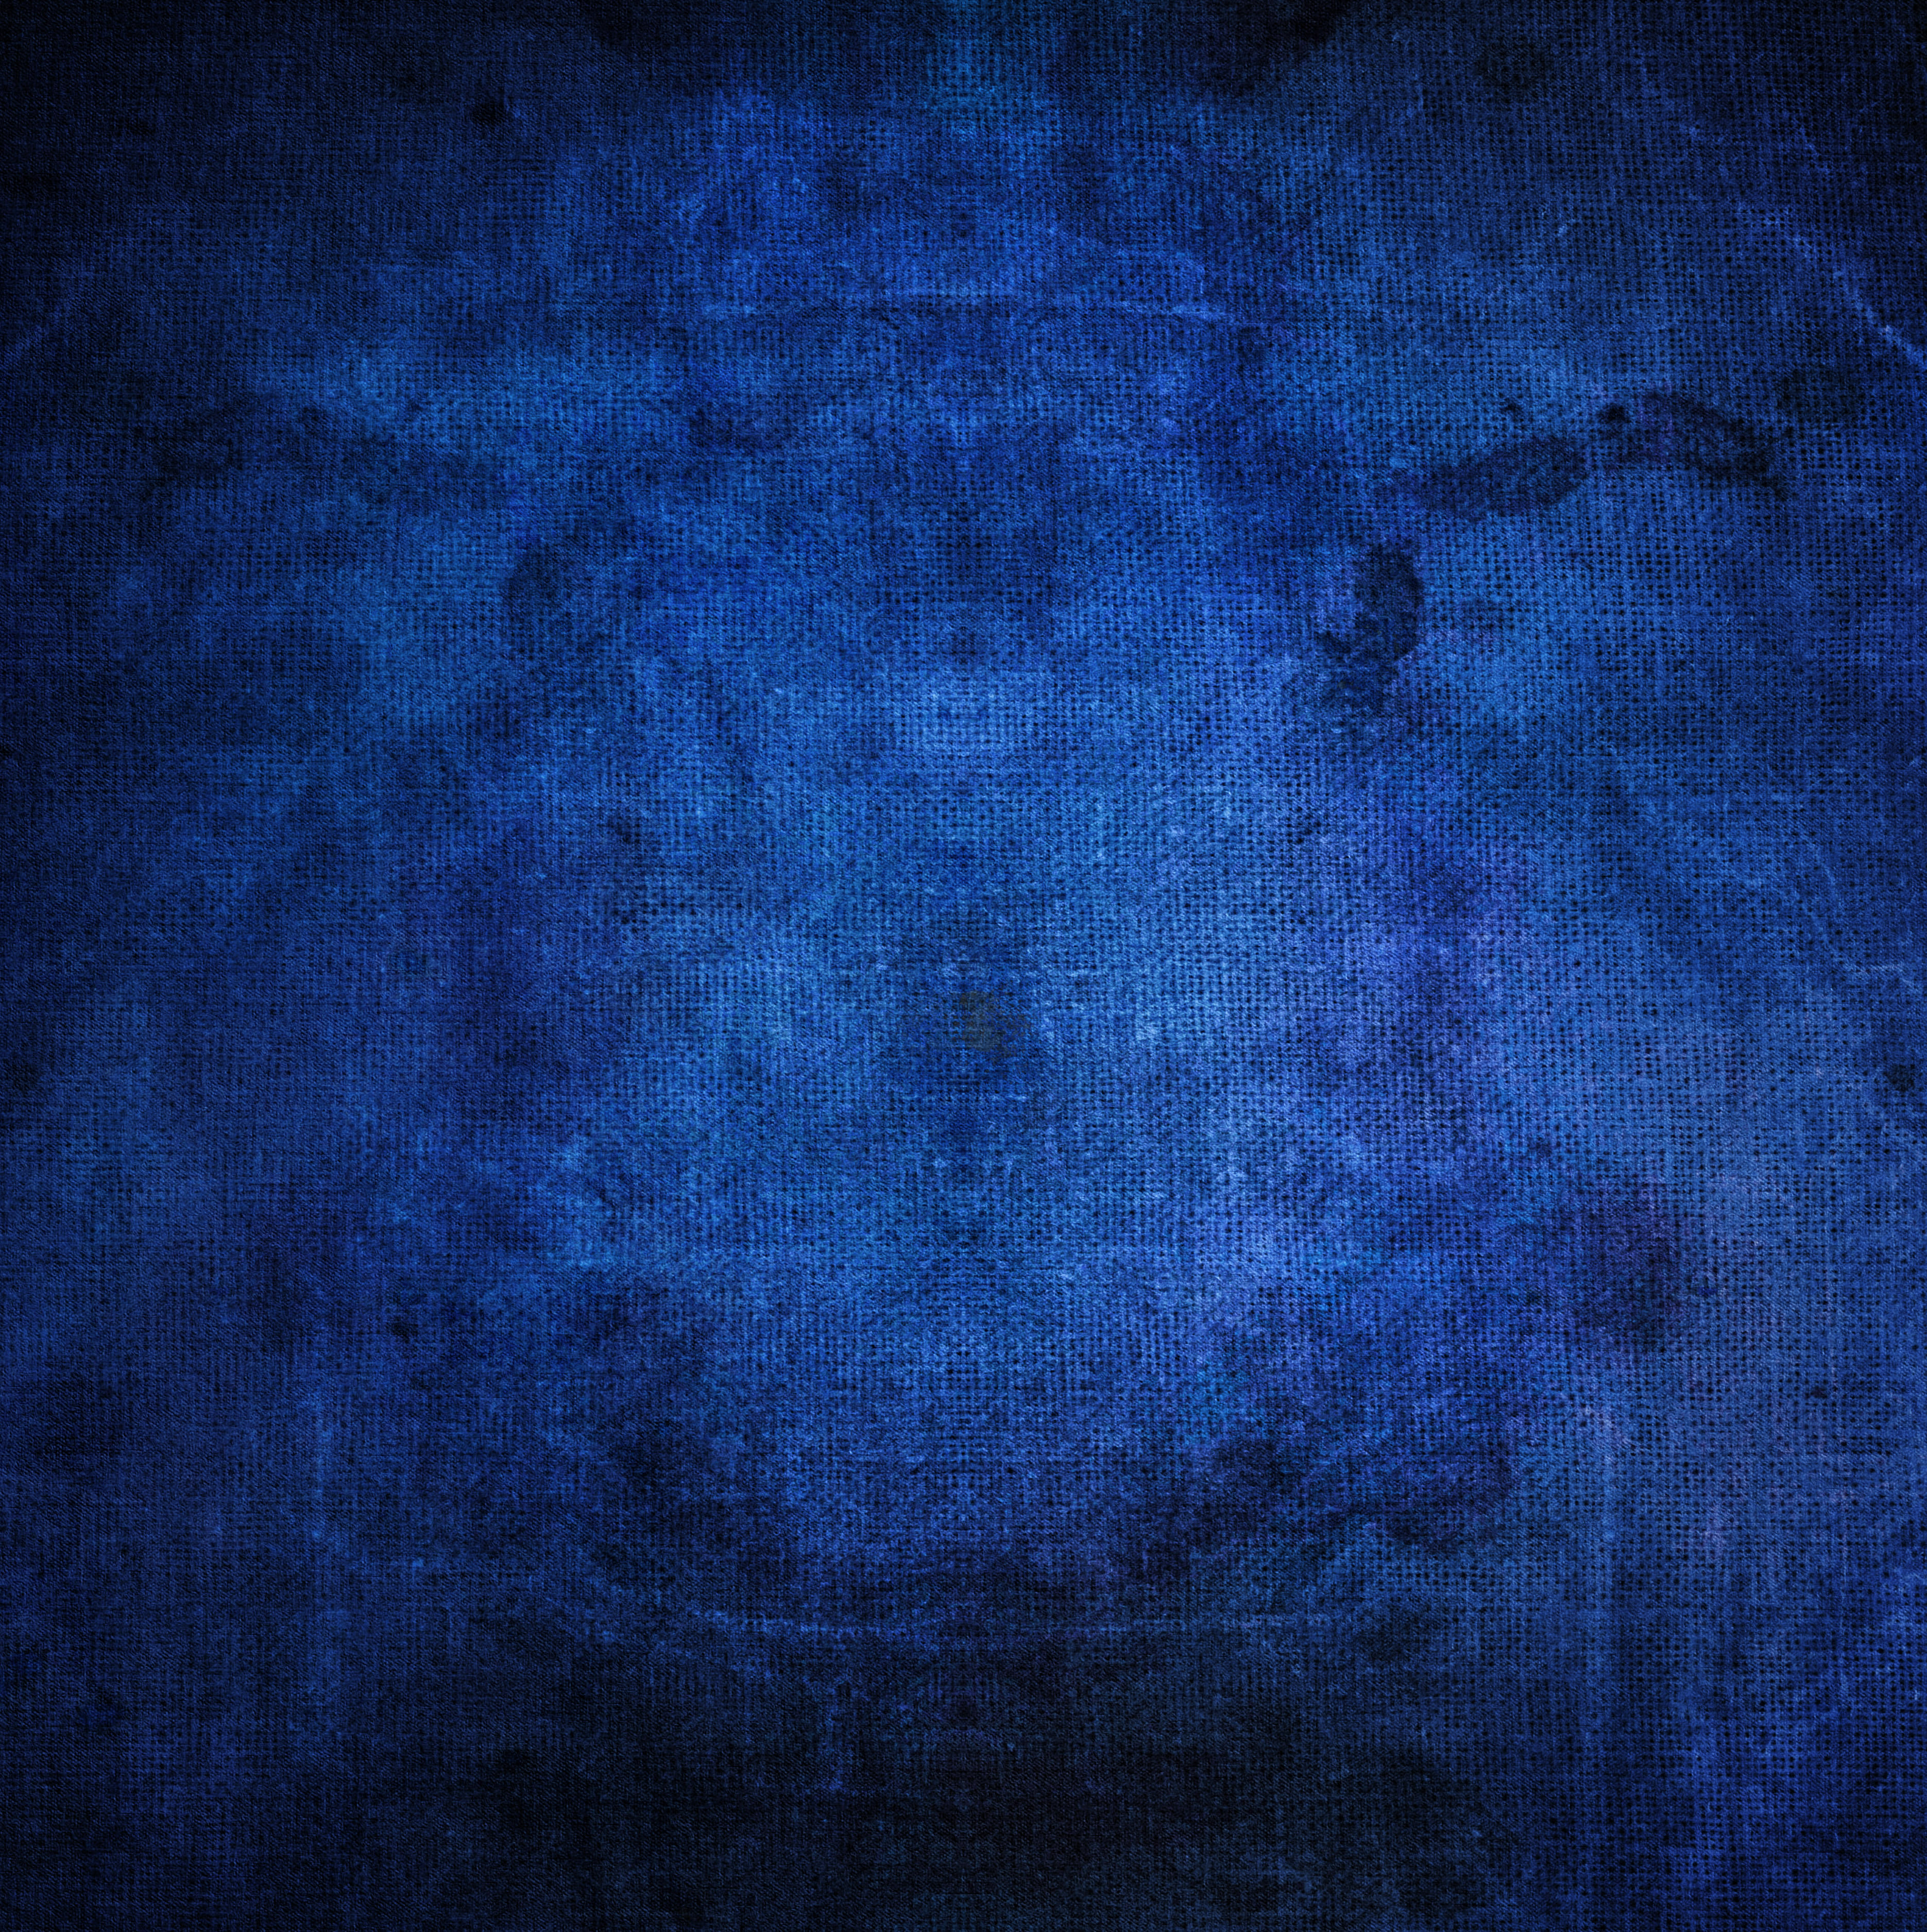 Deep Blue Abstract Grunge Texture Mytextures